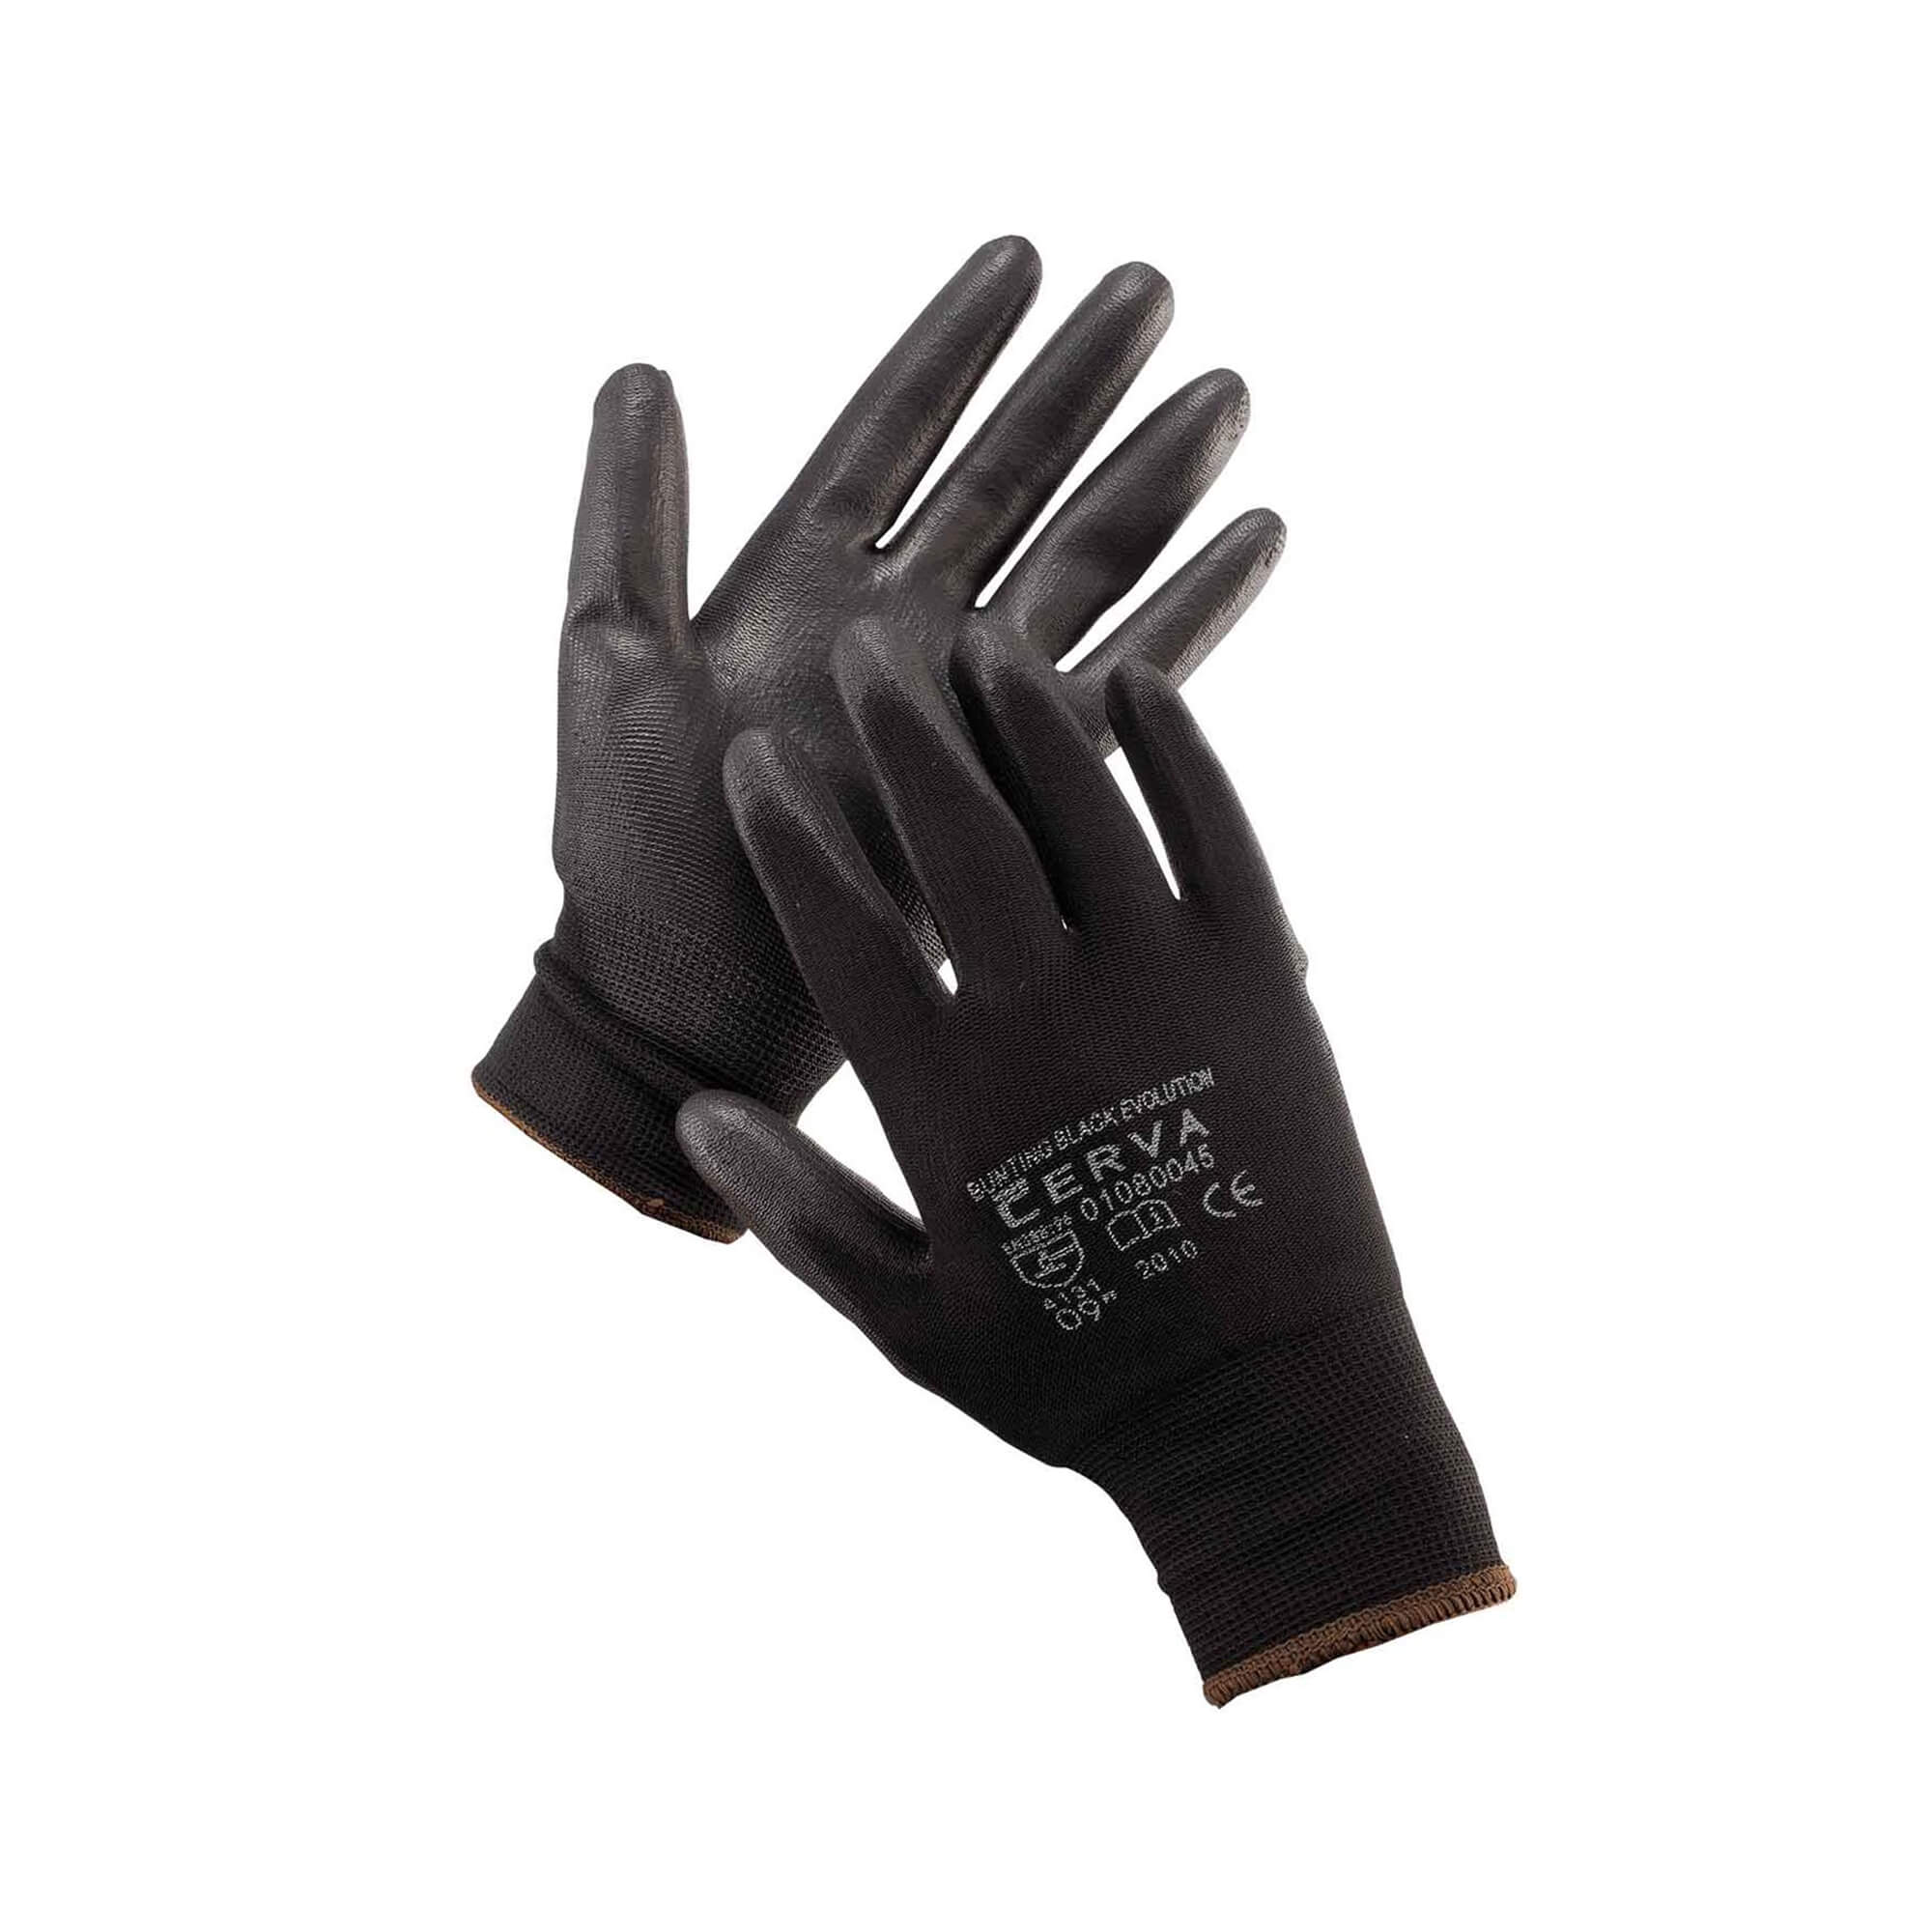 Protective work gloves Bunting Black Evolution